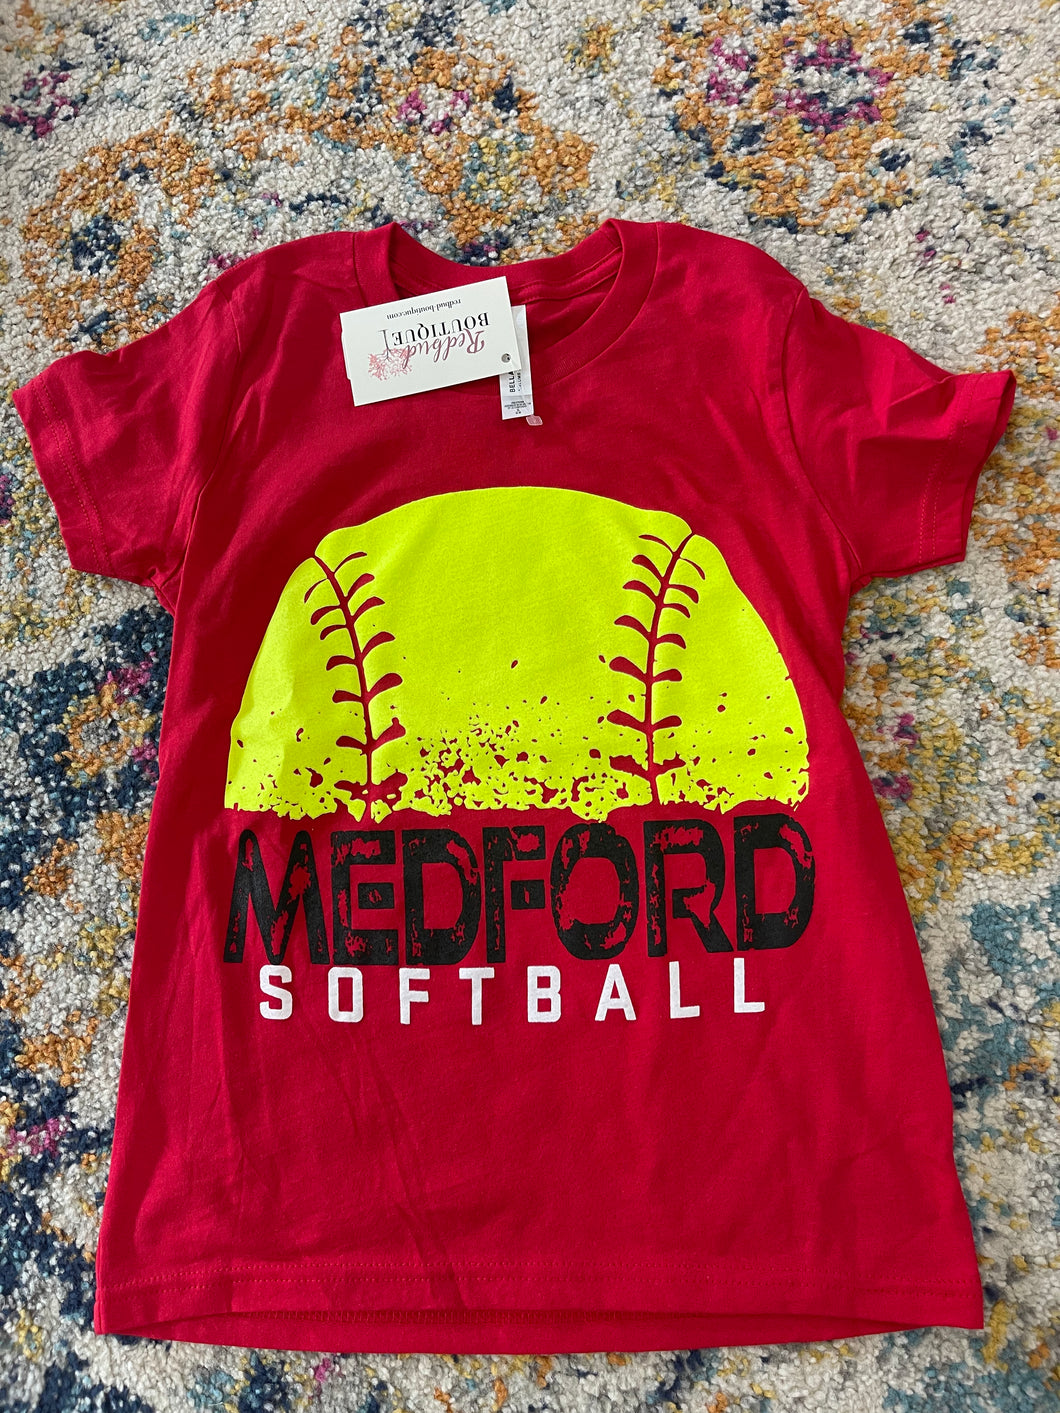 Medford softball